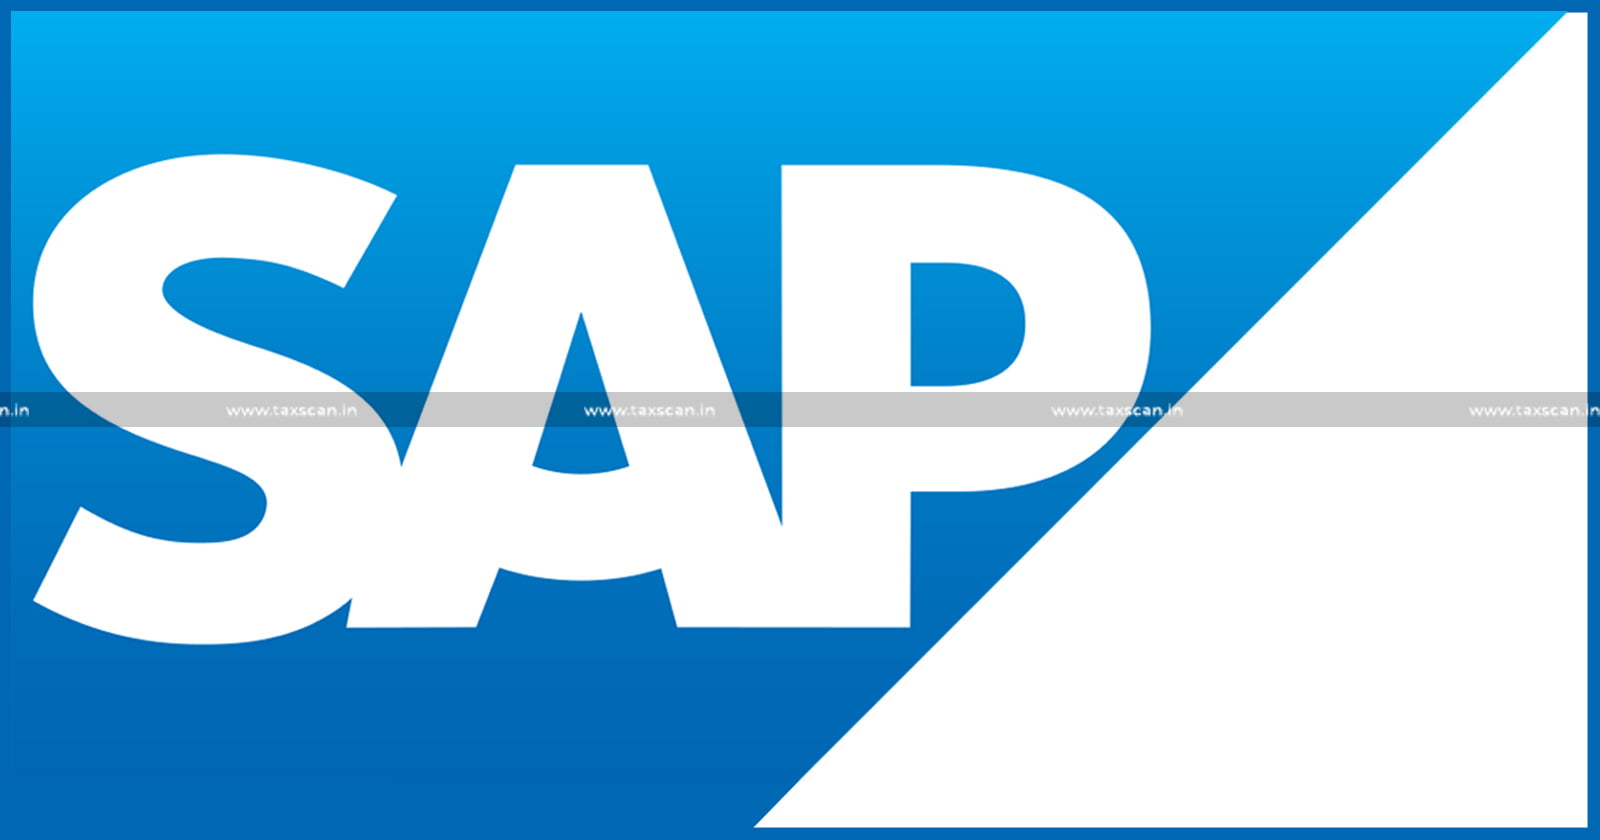 MBA Vacancy in SAP - CMA Vacancy in SAP - CA Vacancy in SAP - Jobscan - taxscan